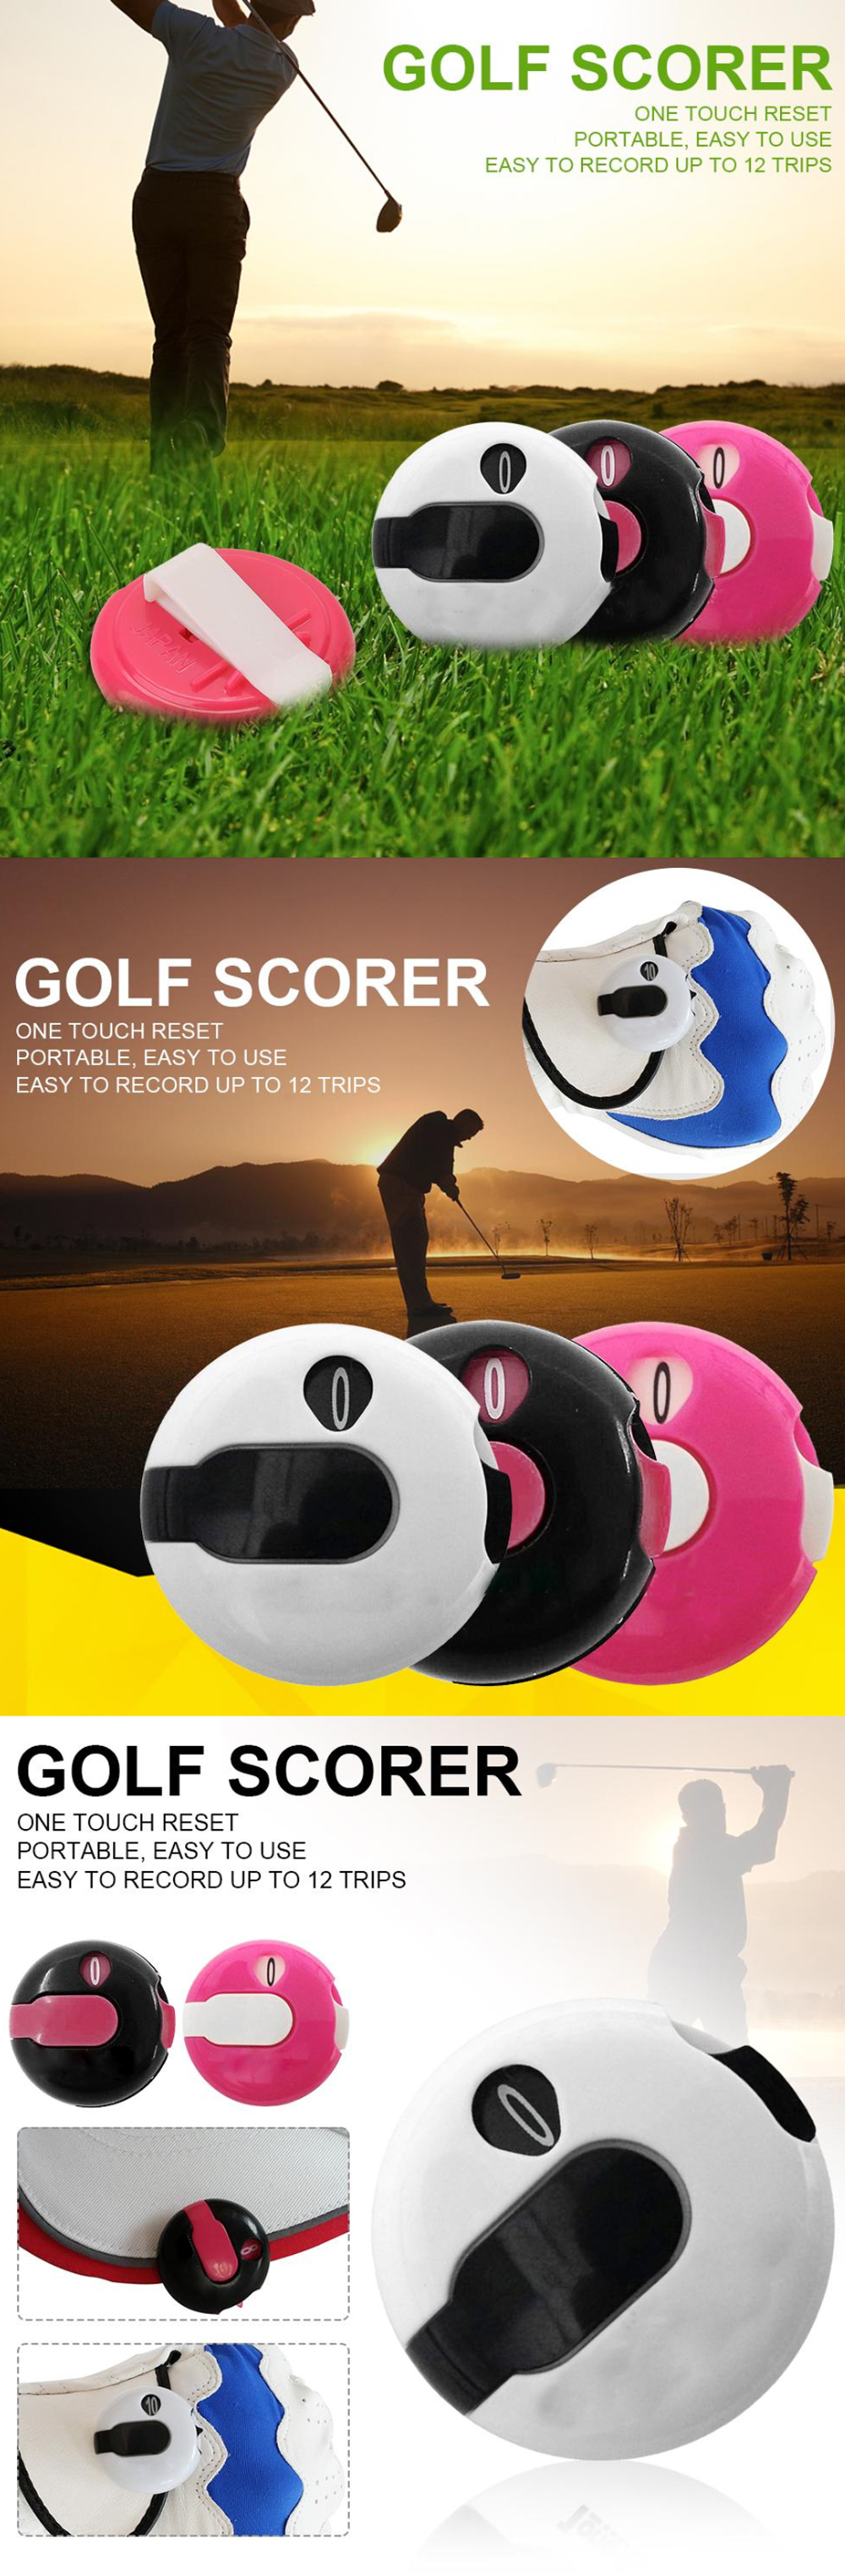 KALOAD-Mini-Golf-Score-Counter-One-touch-Reset-Scorekeeper-Scoring-Outdoor-Sport-Golf-Accessories-1780308-1